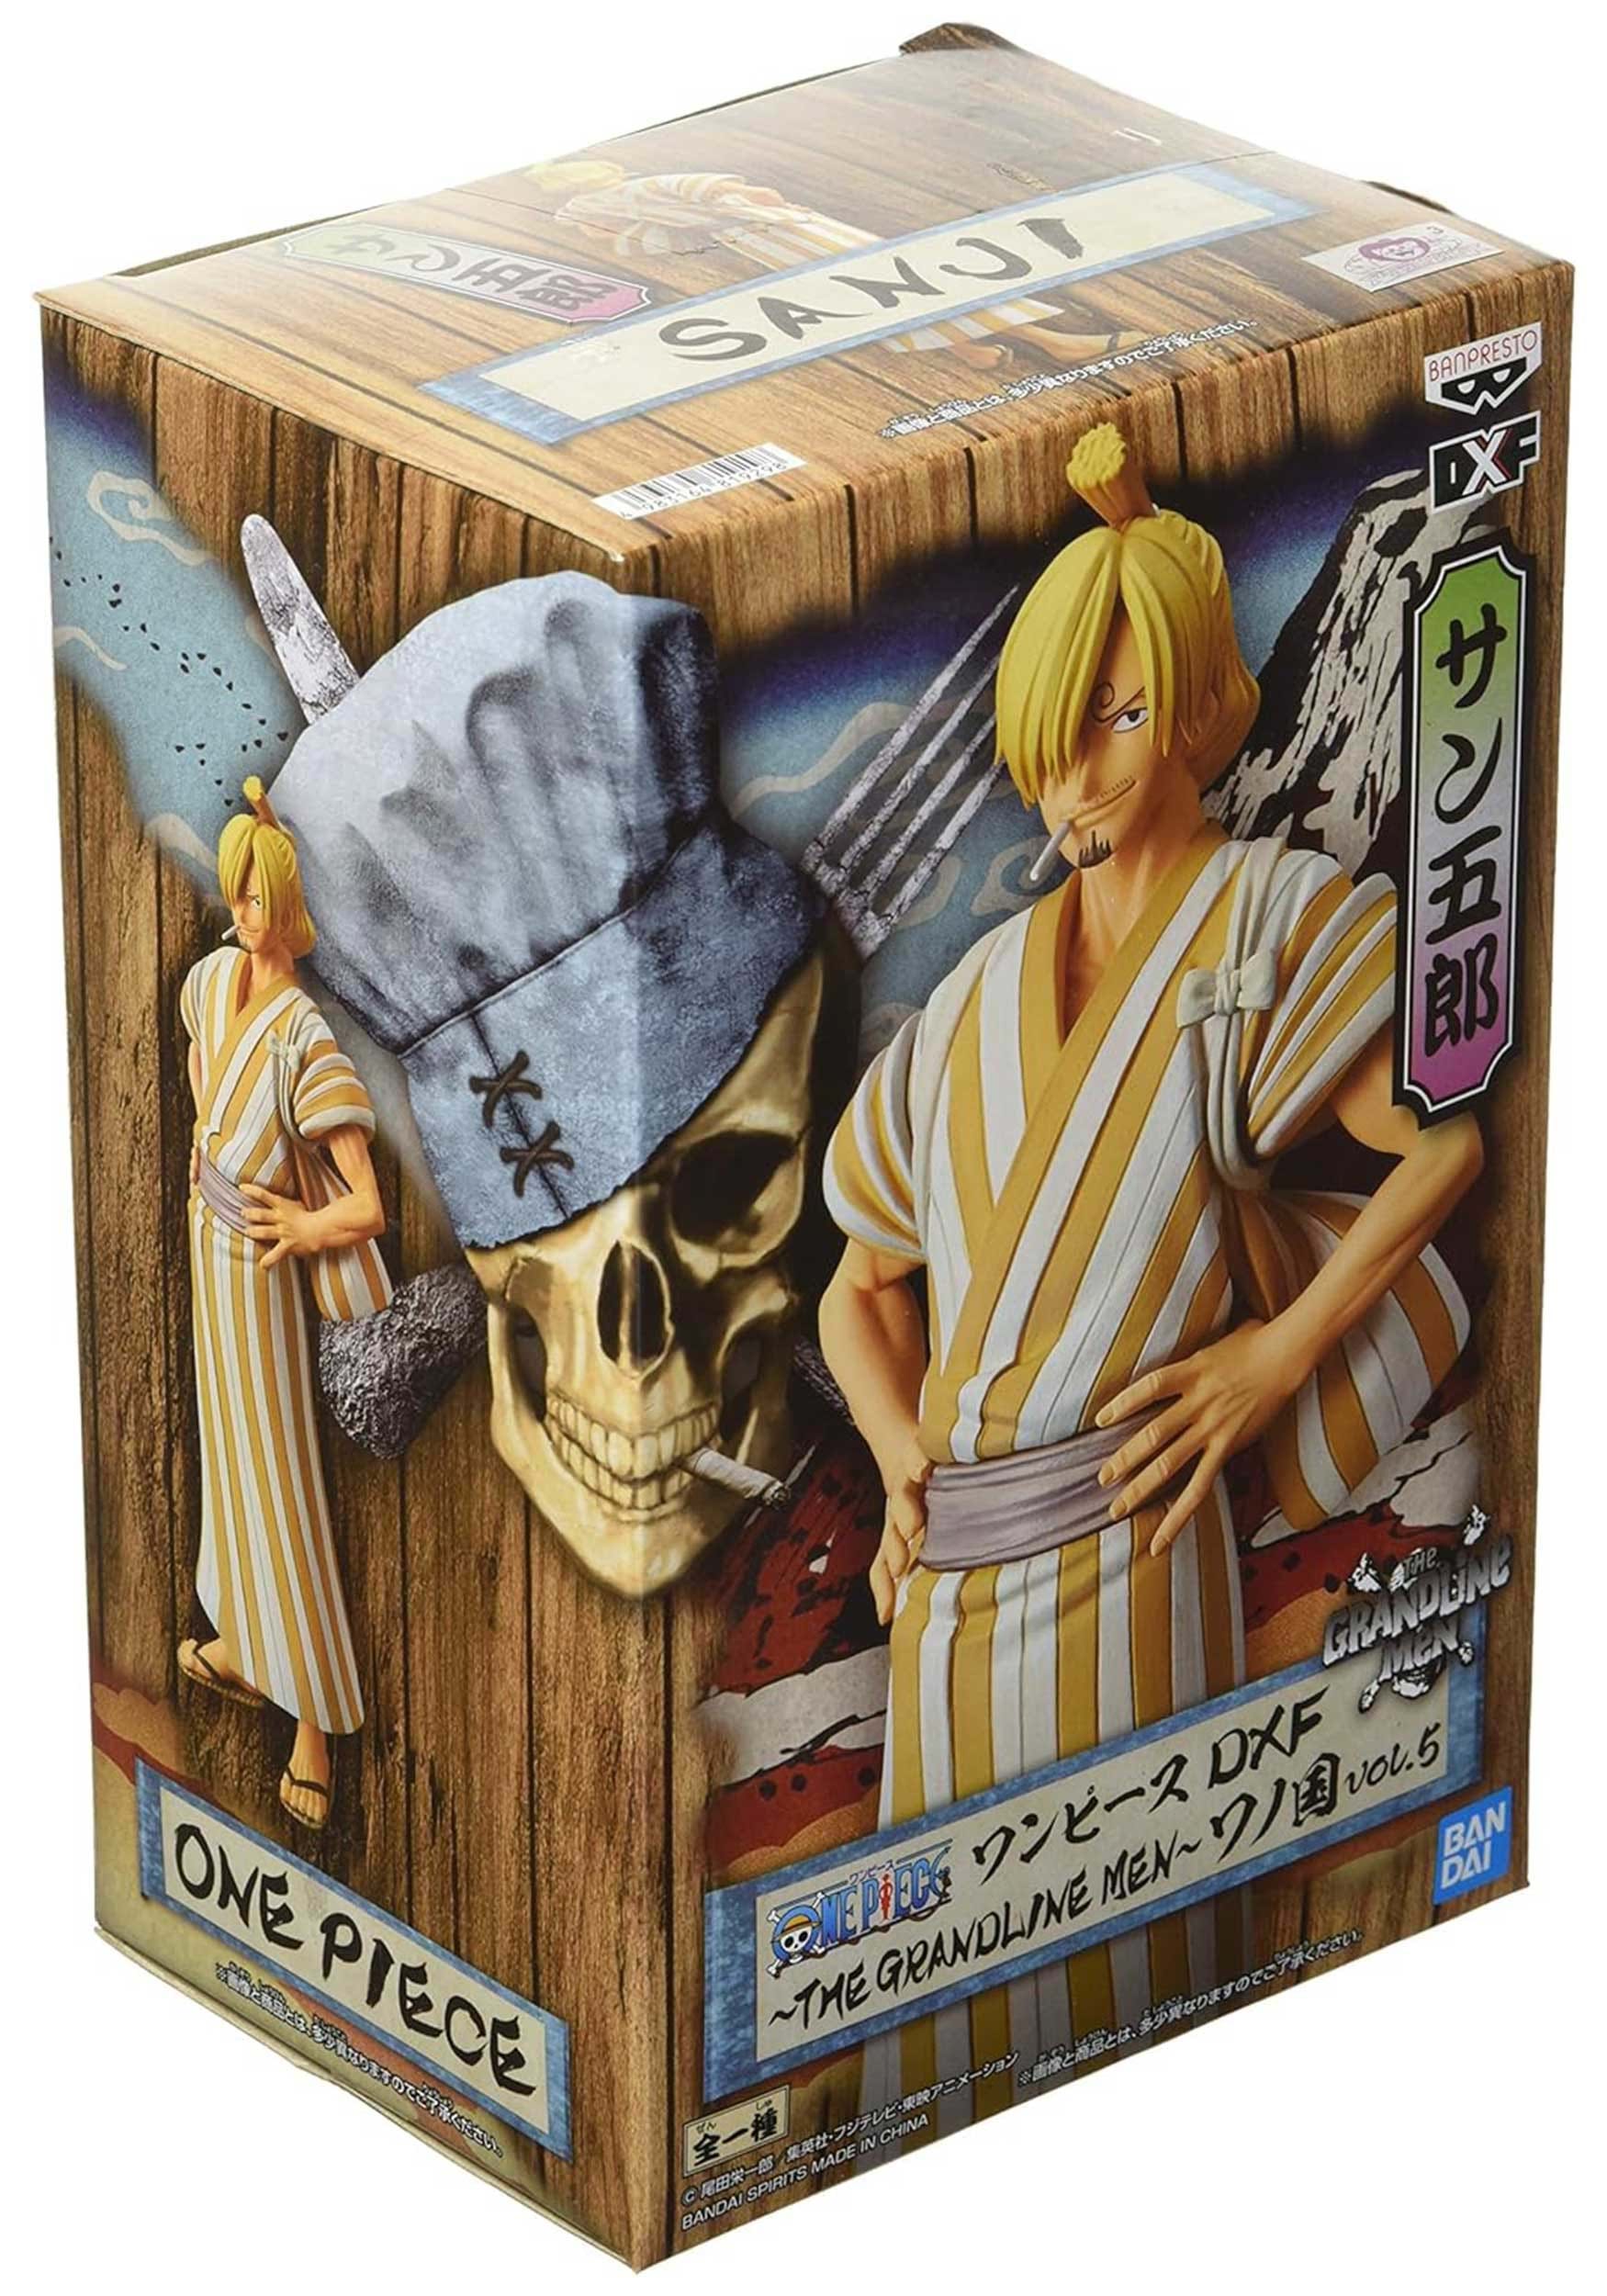 Banpresto x Bandai: One Piece - DXF The Grandline Wano Country Vol. 5 Sanji  Figure